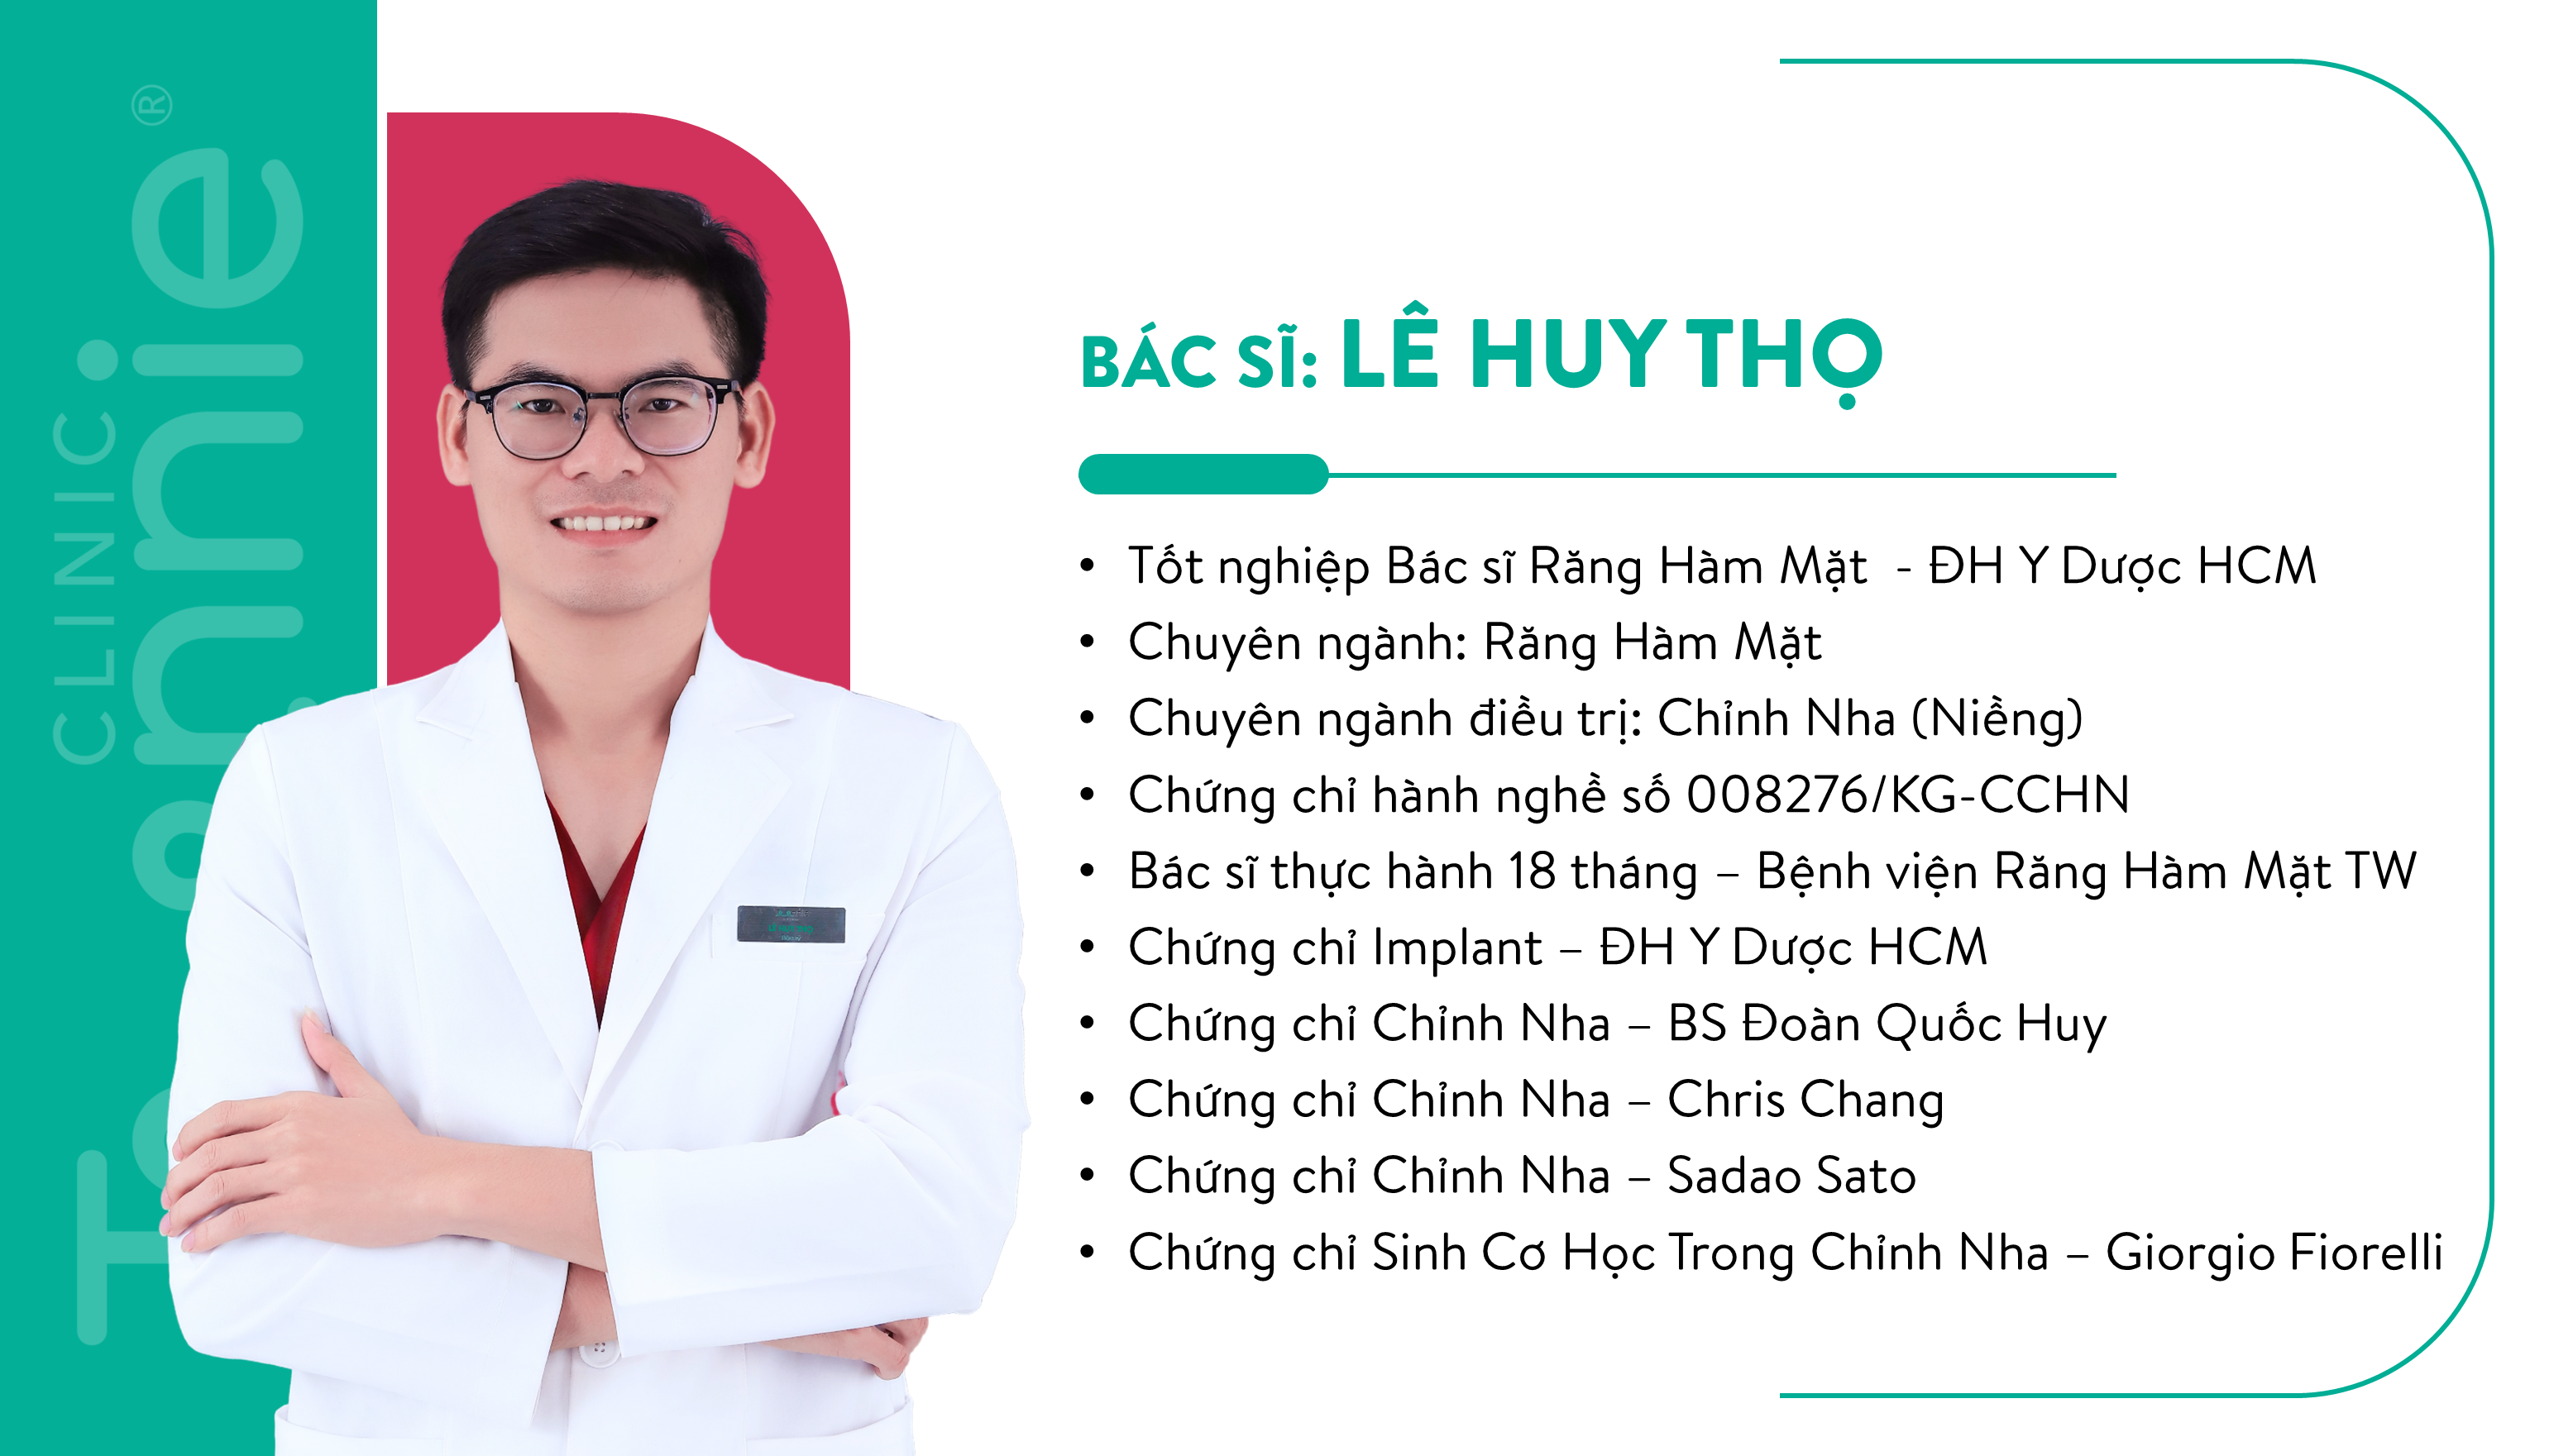 Bác sĩ Lê Huy Thọ